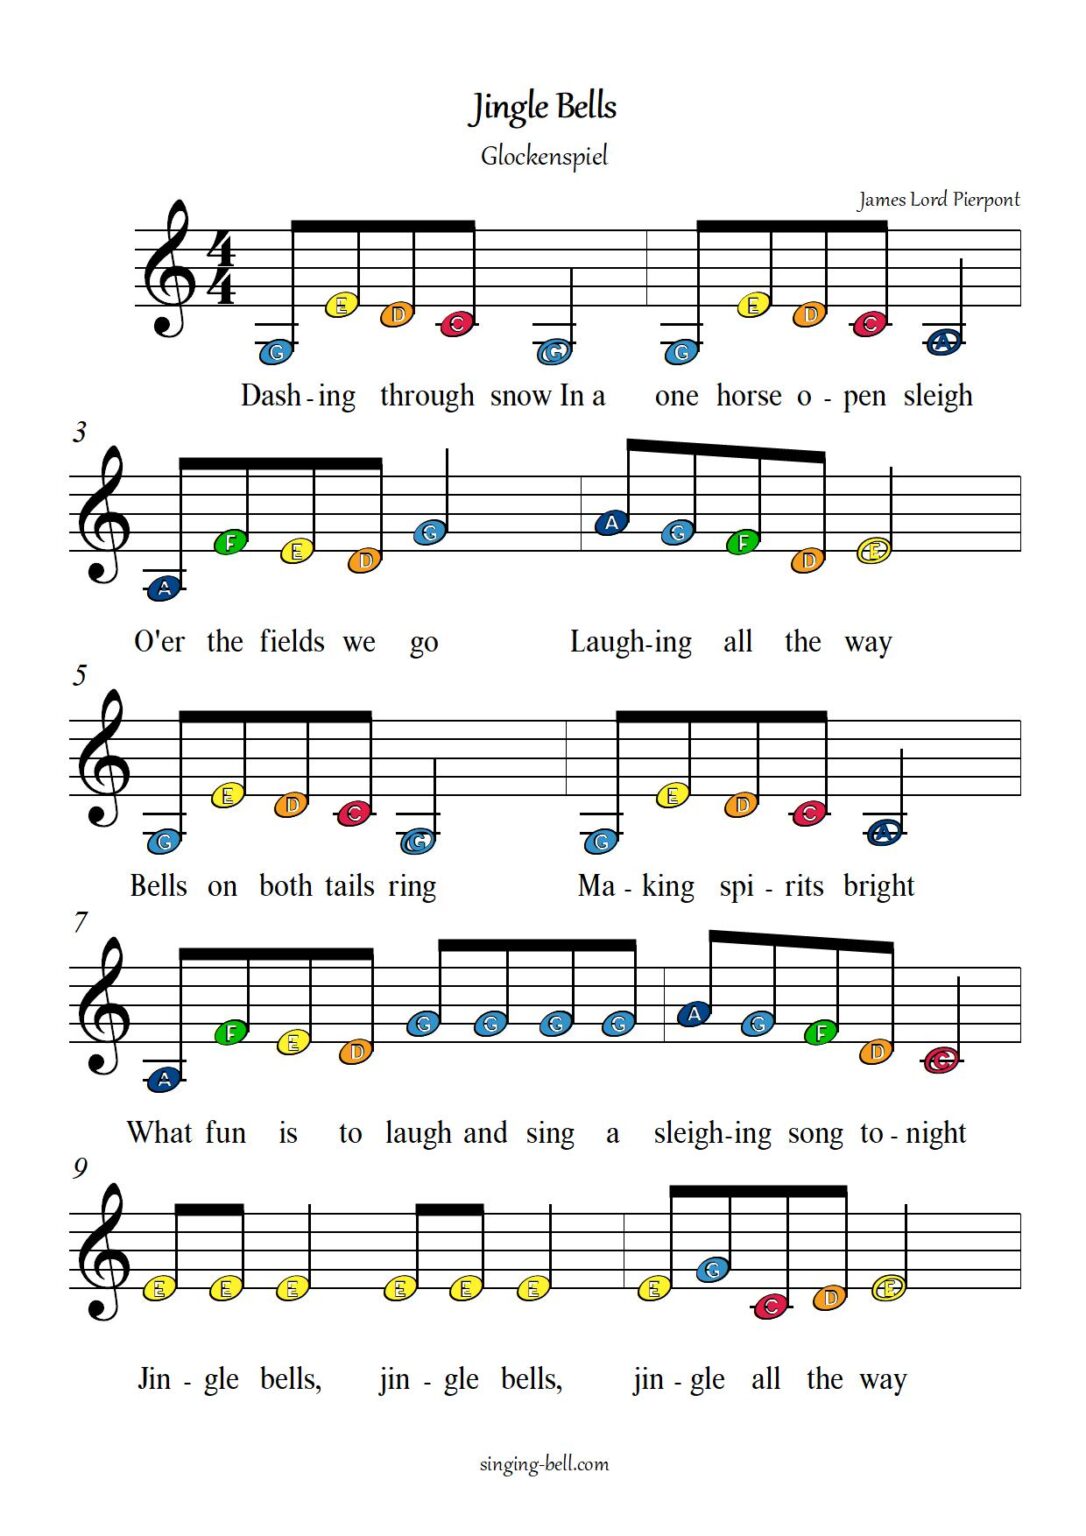 jingle-bells-how-to-play-on-glockenspiel-xylophone-singing-bell